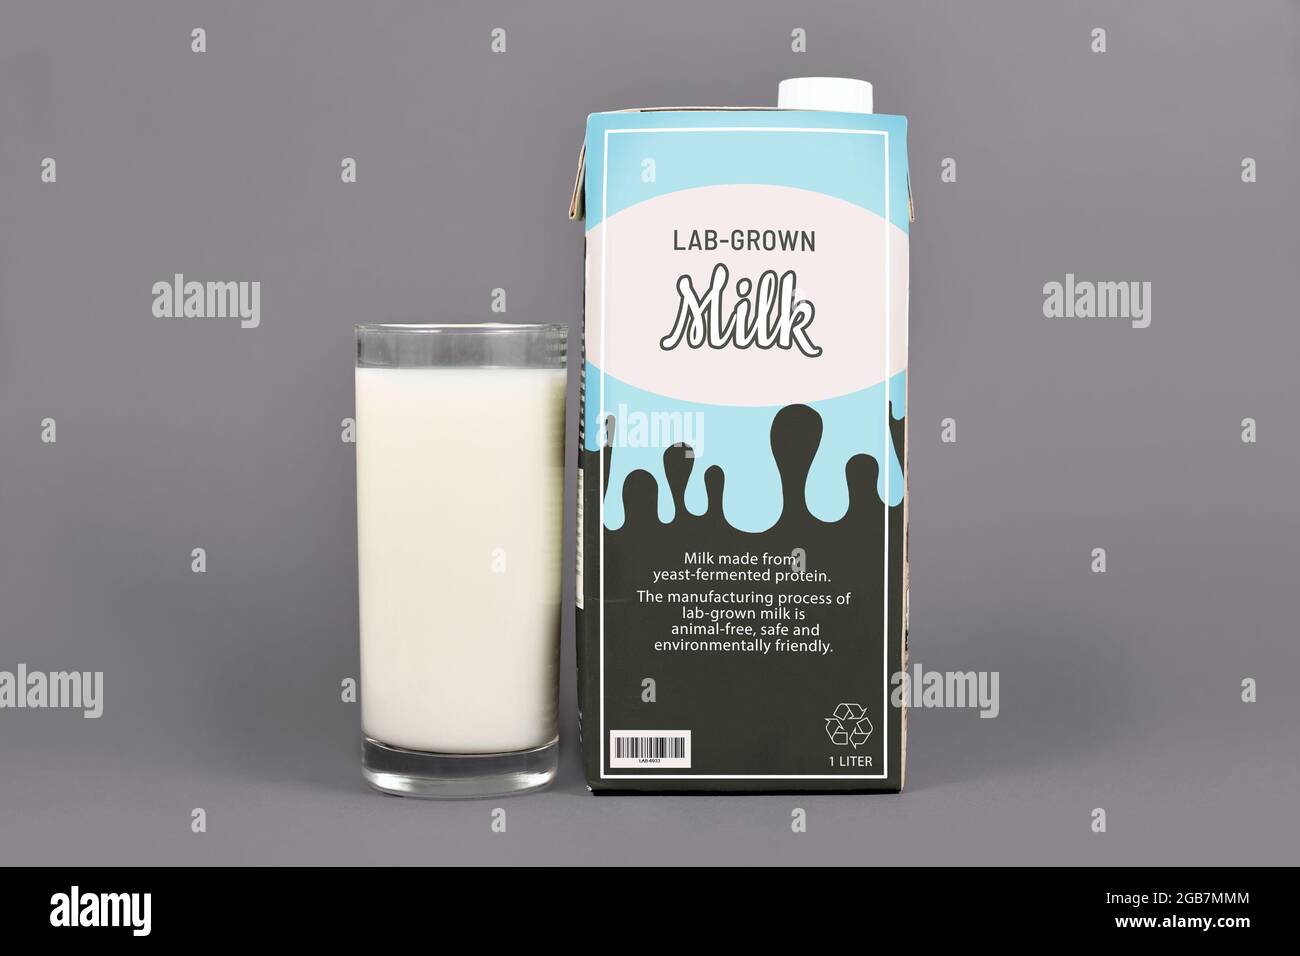 Concepto de leche cultivada en laboratorio para la producción de lácteos cultivados de forma artificial a partir de proteínas de leche reproducidas con cartón con etiqueta Foto de stock